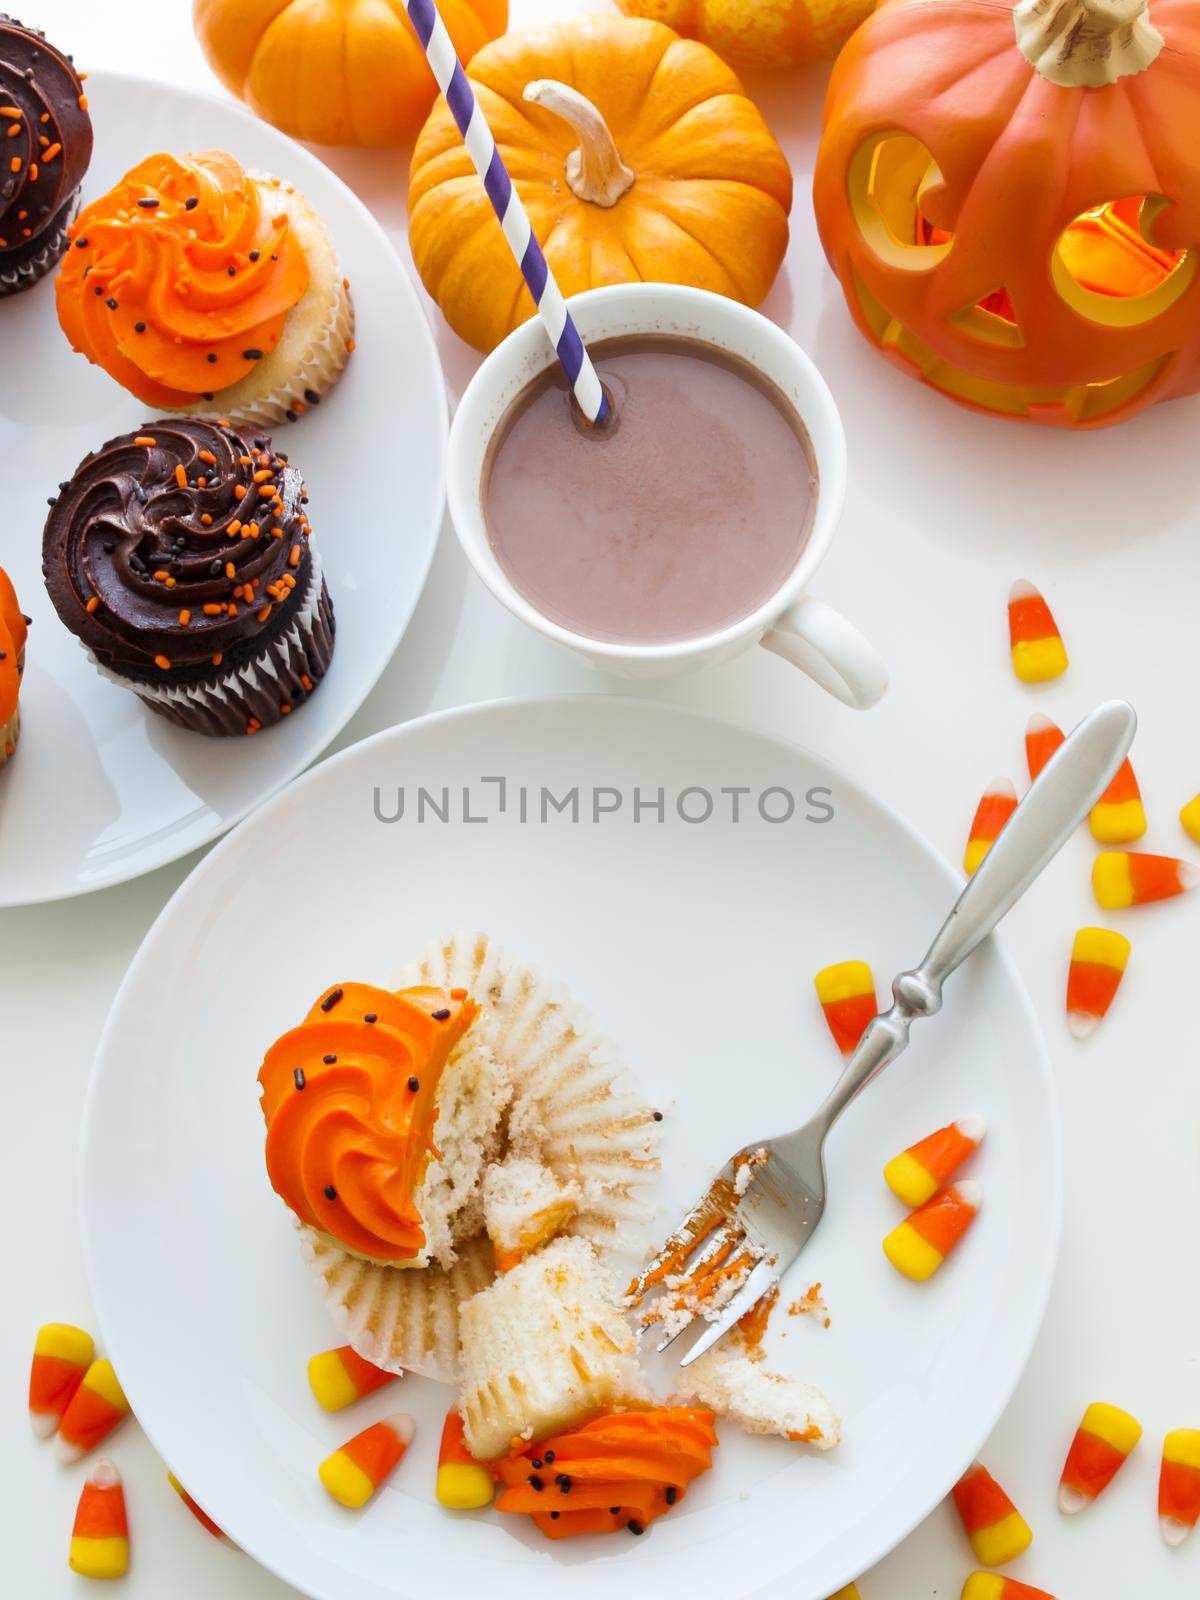 Cupcakes by arinahabich